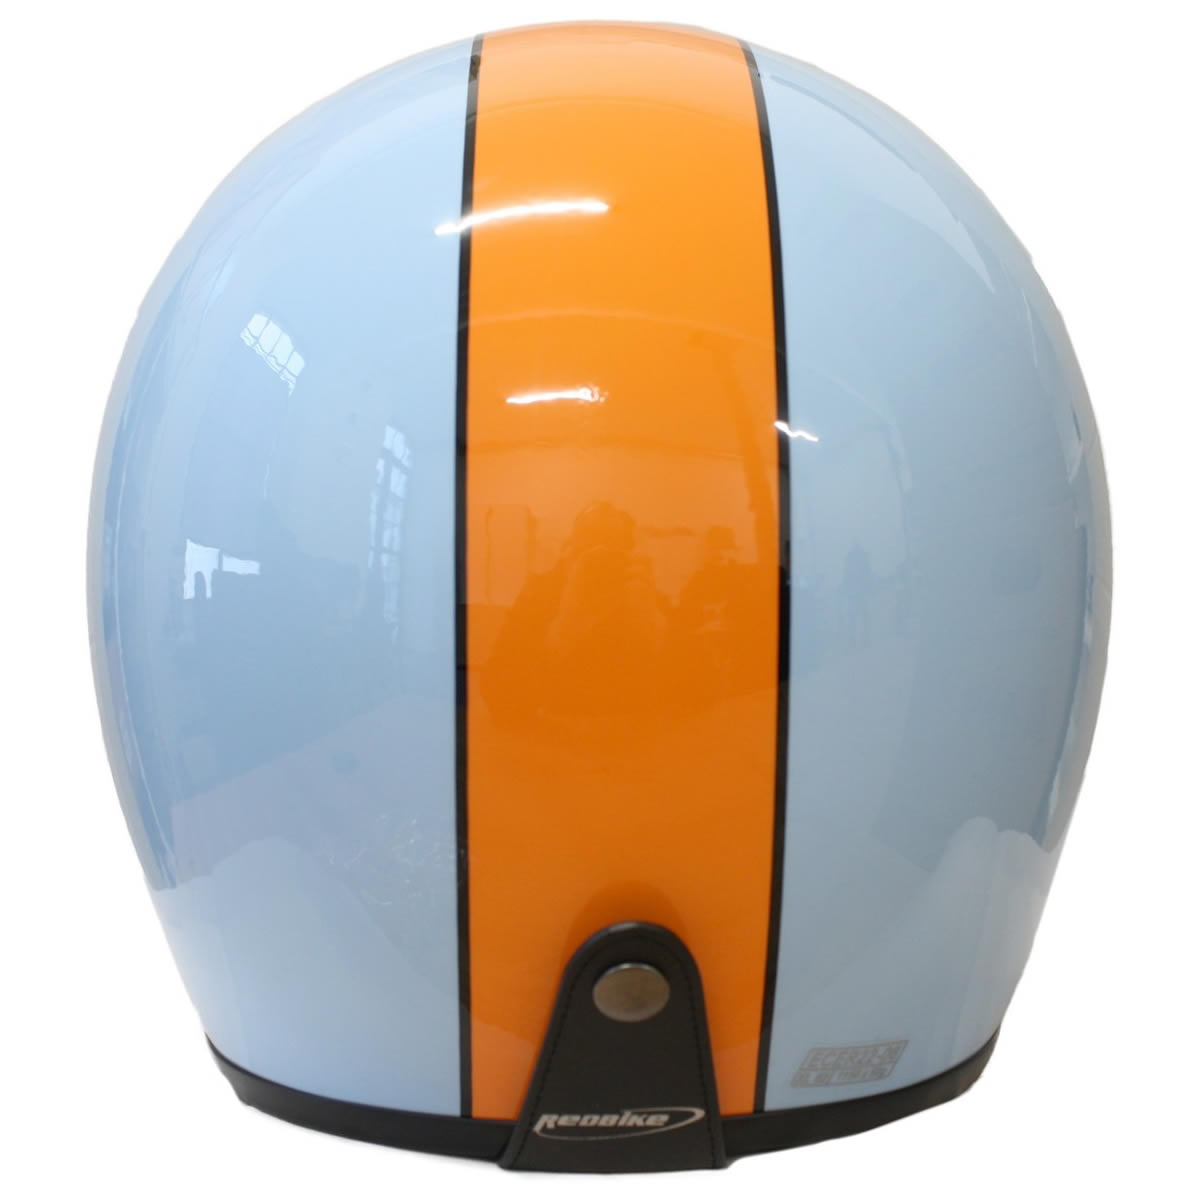 Redbike RB801 Gasoline Helm, hellblau-orange